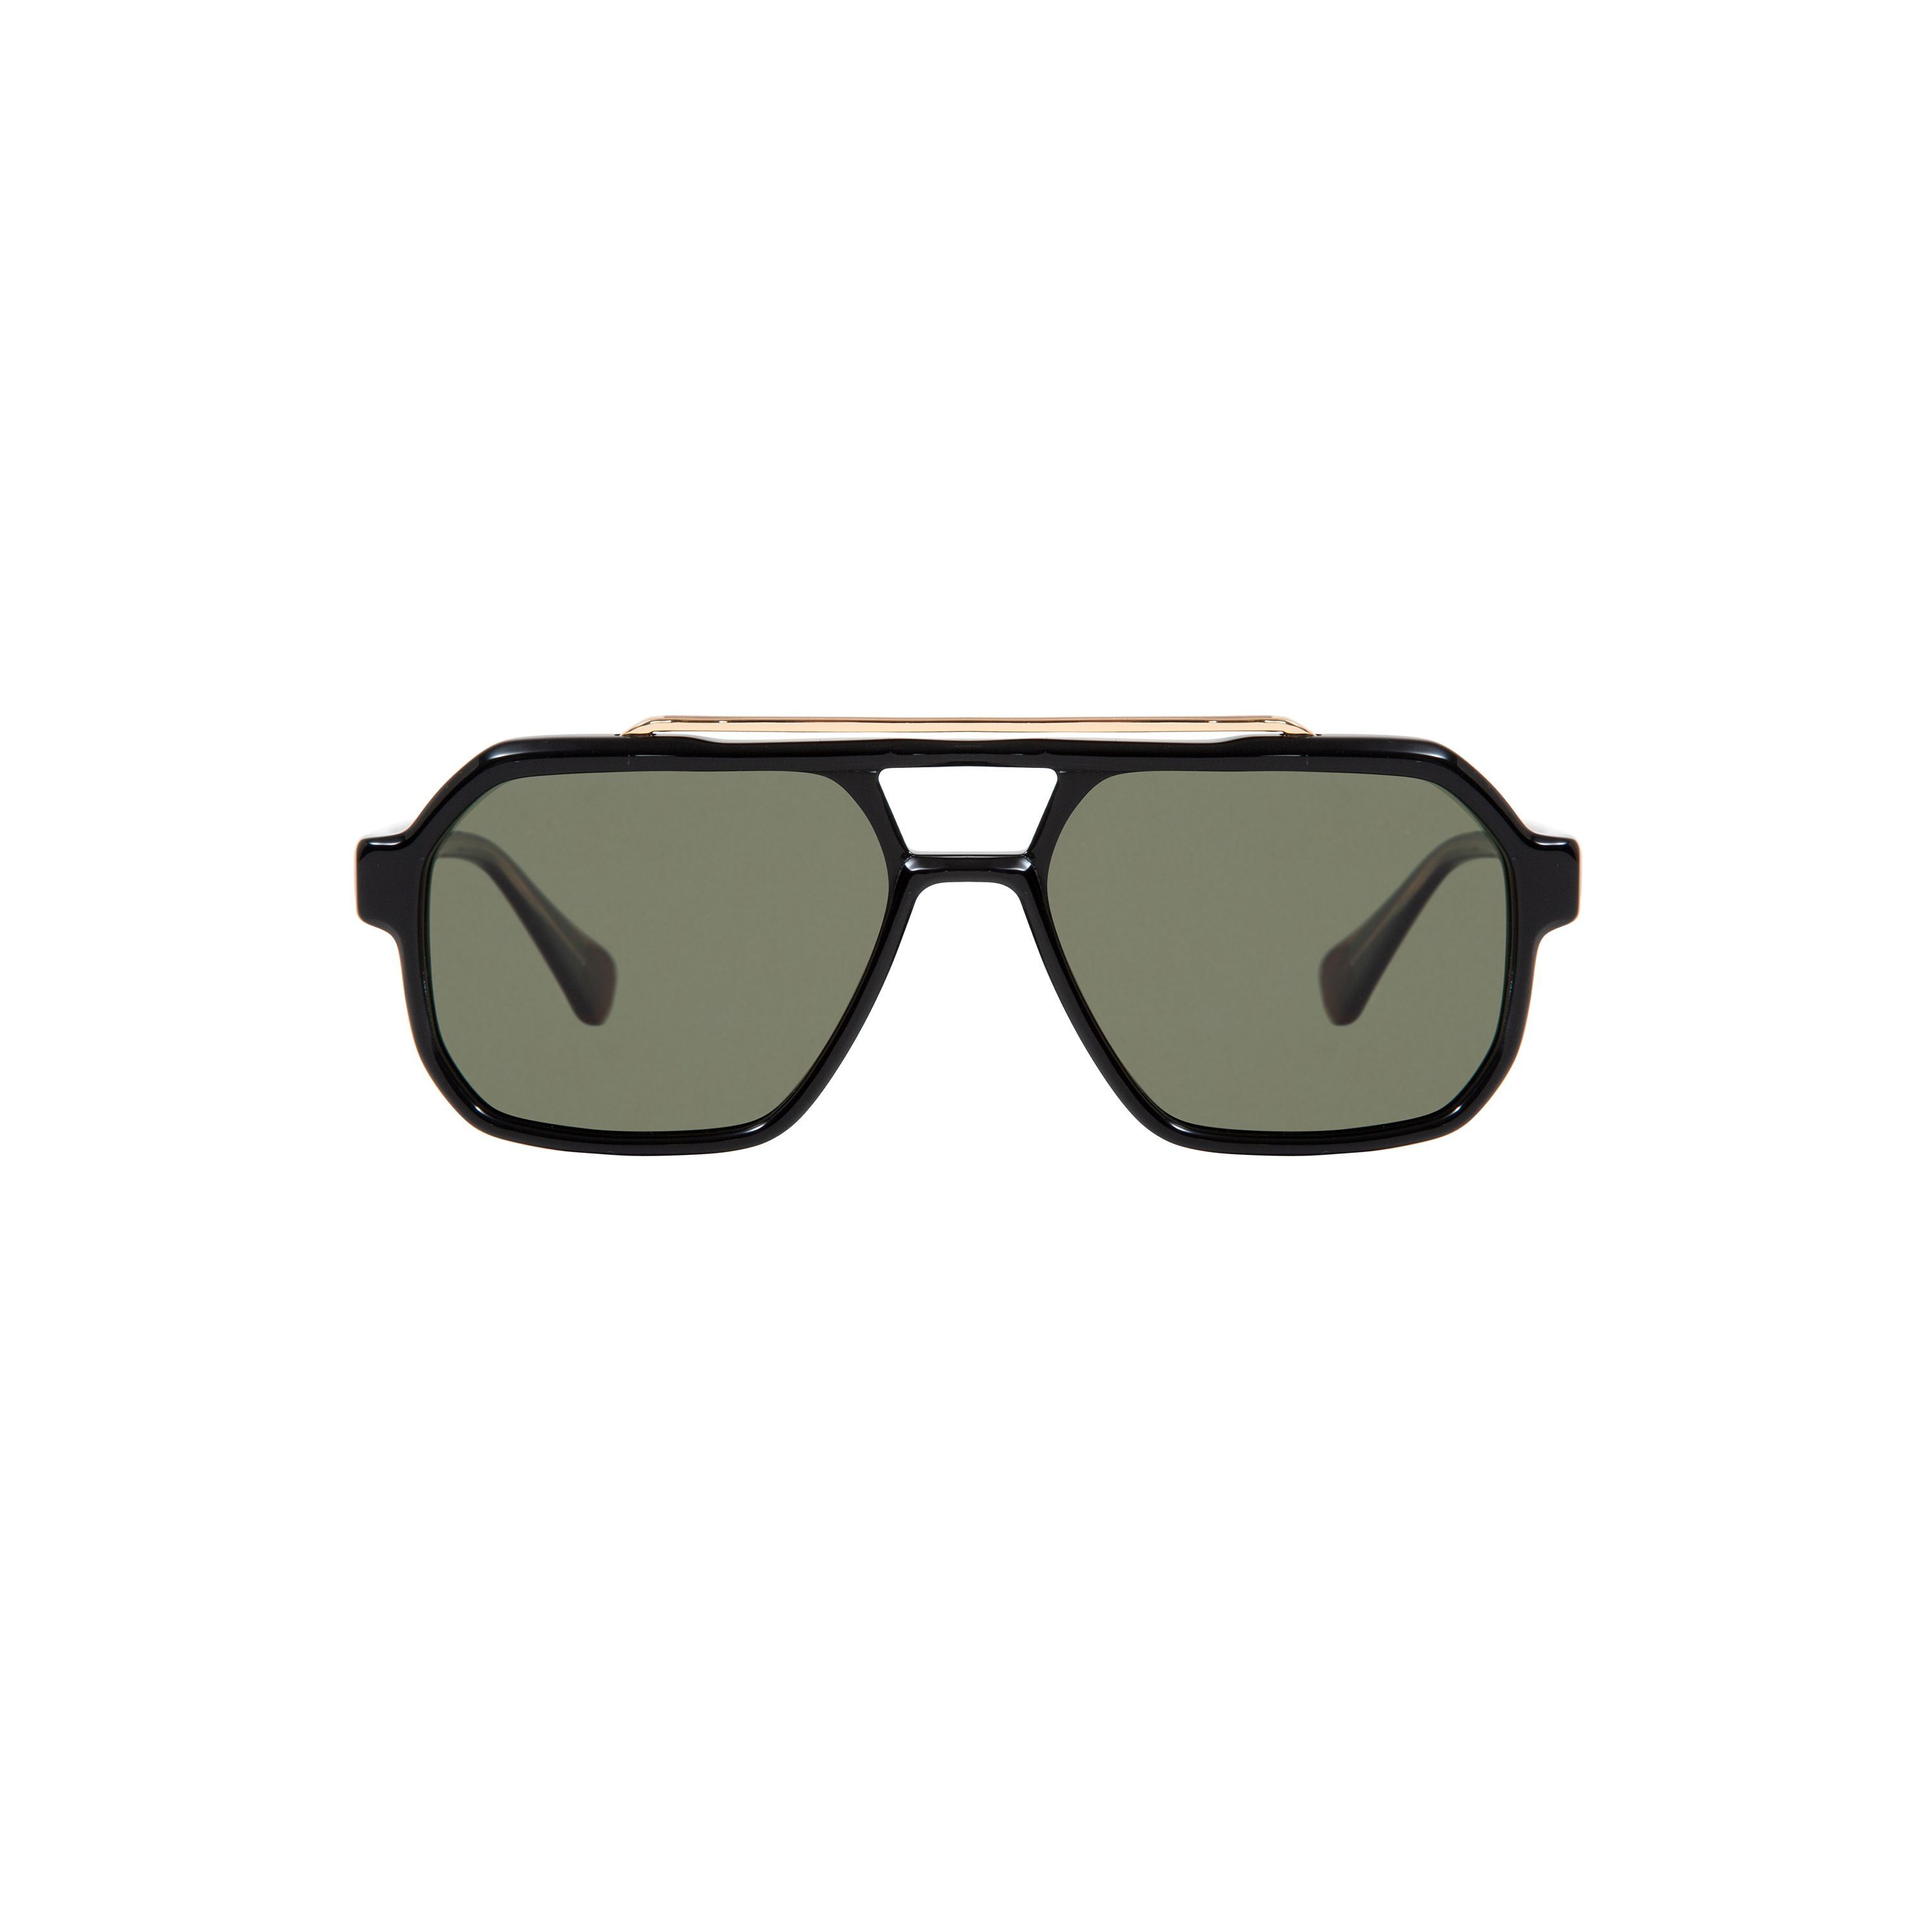 6668 Pilot Sunglasses 1 - size 56